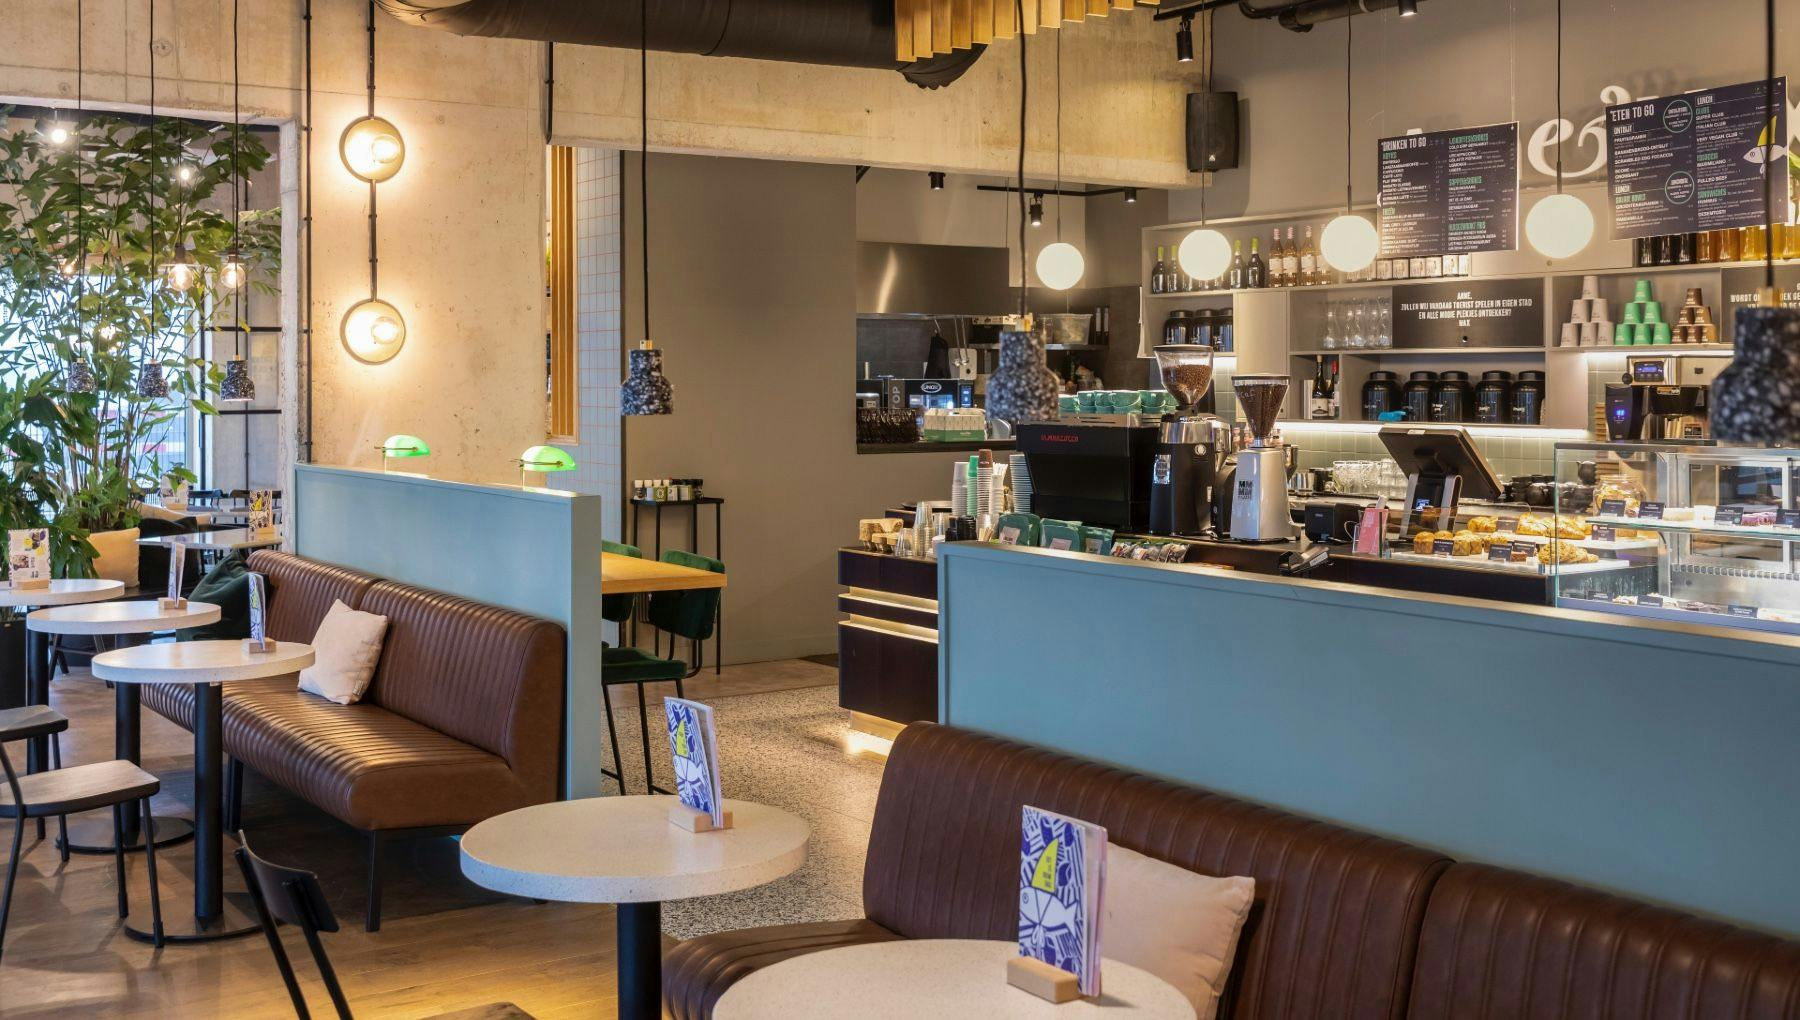 Anne&Max café interior